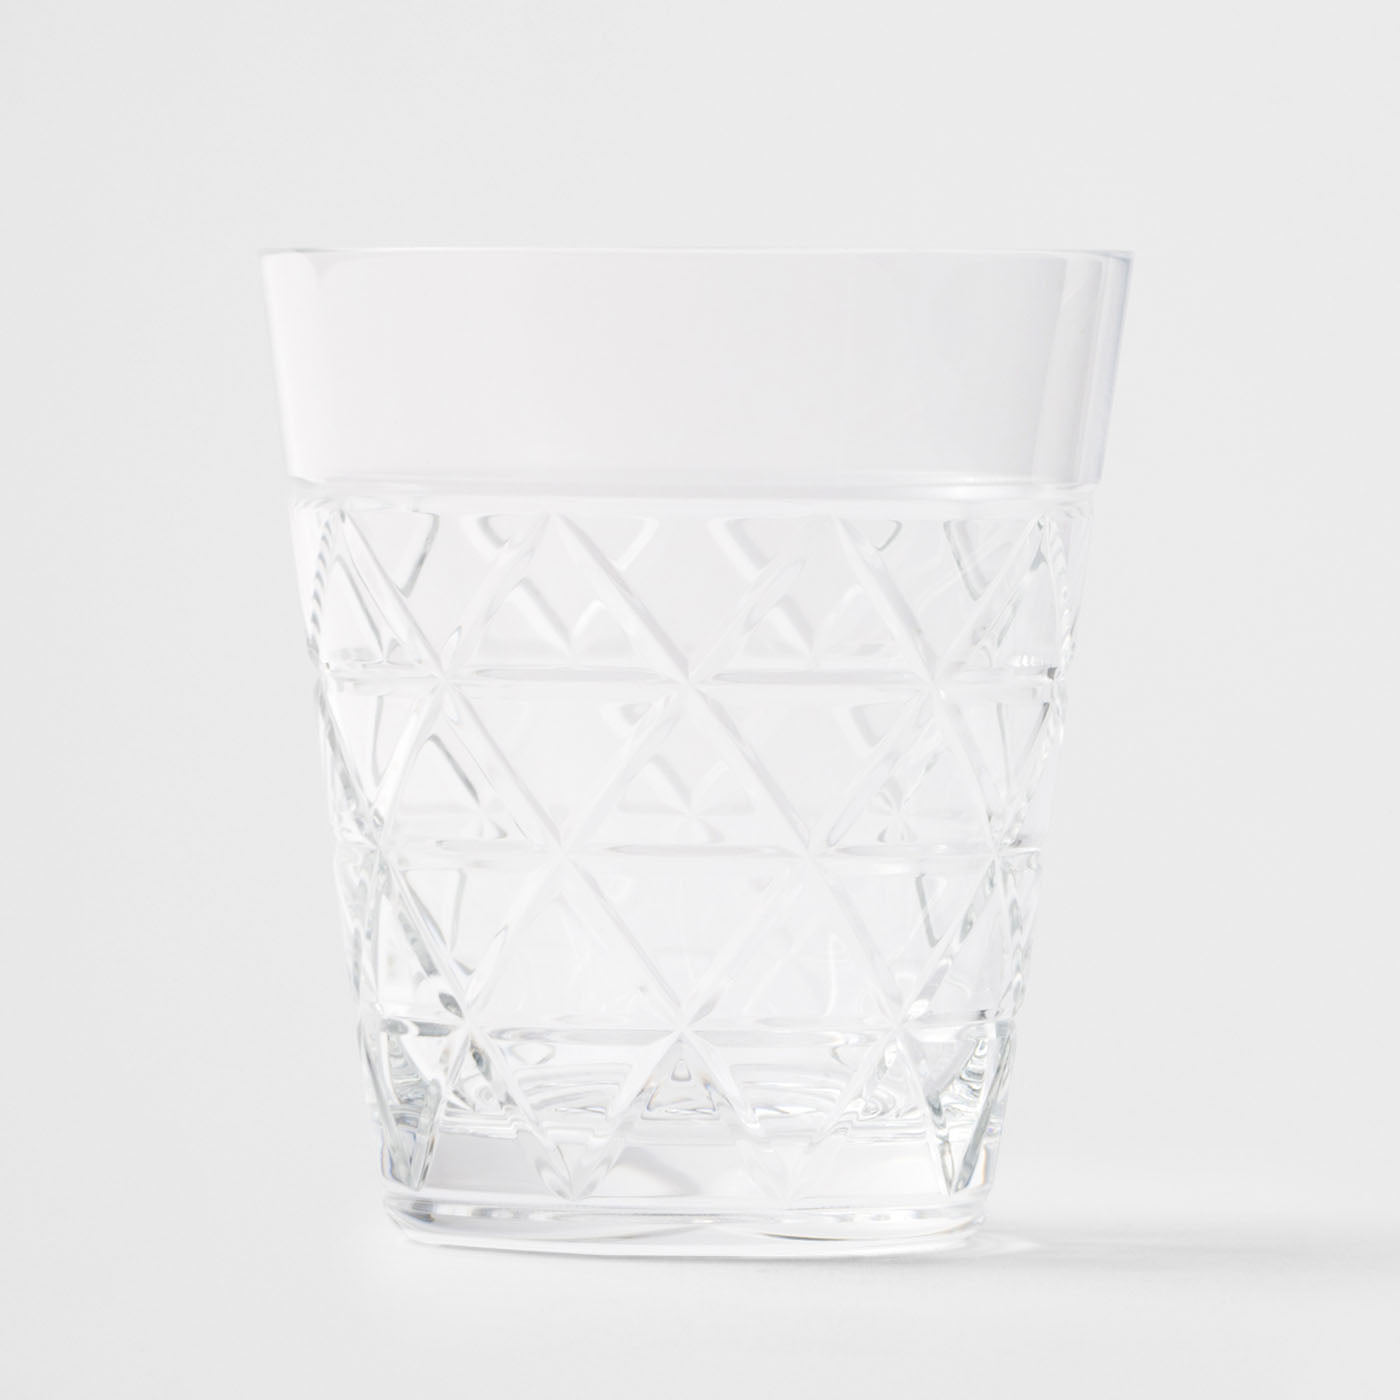 Traingles Crystal Water Glass - Alternative view 1